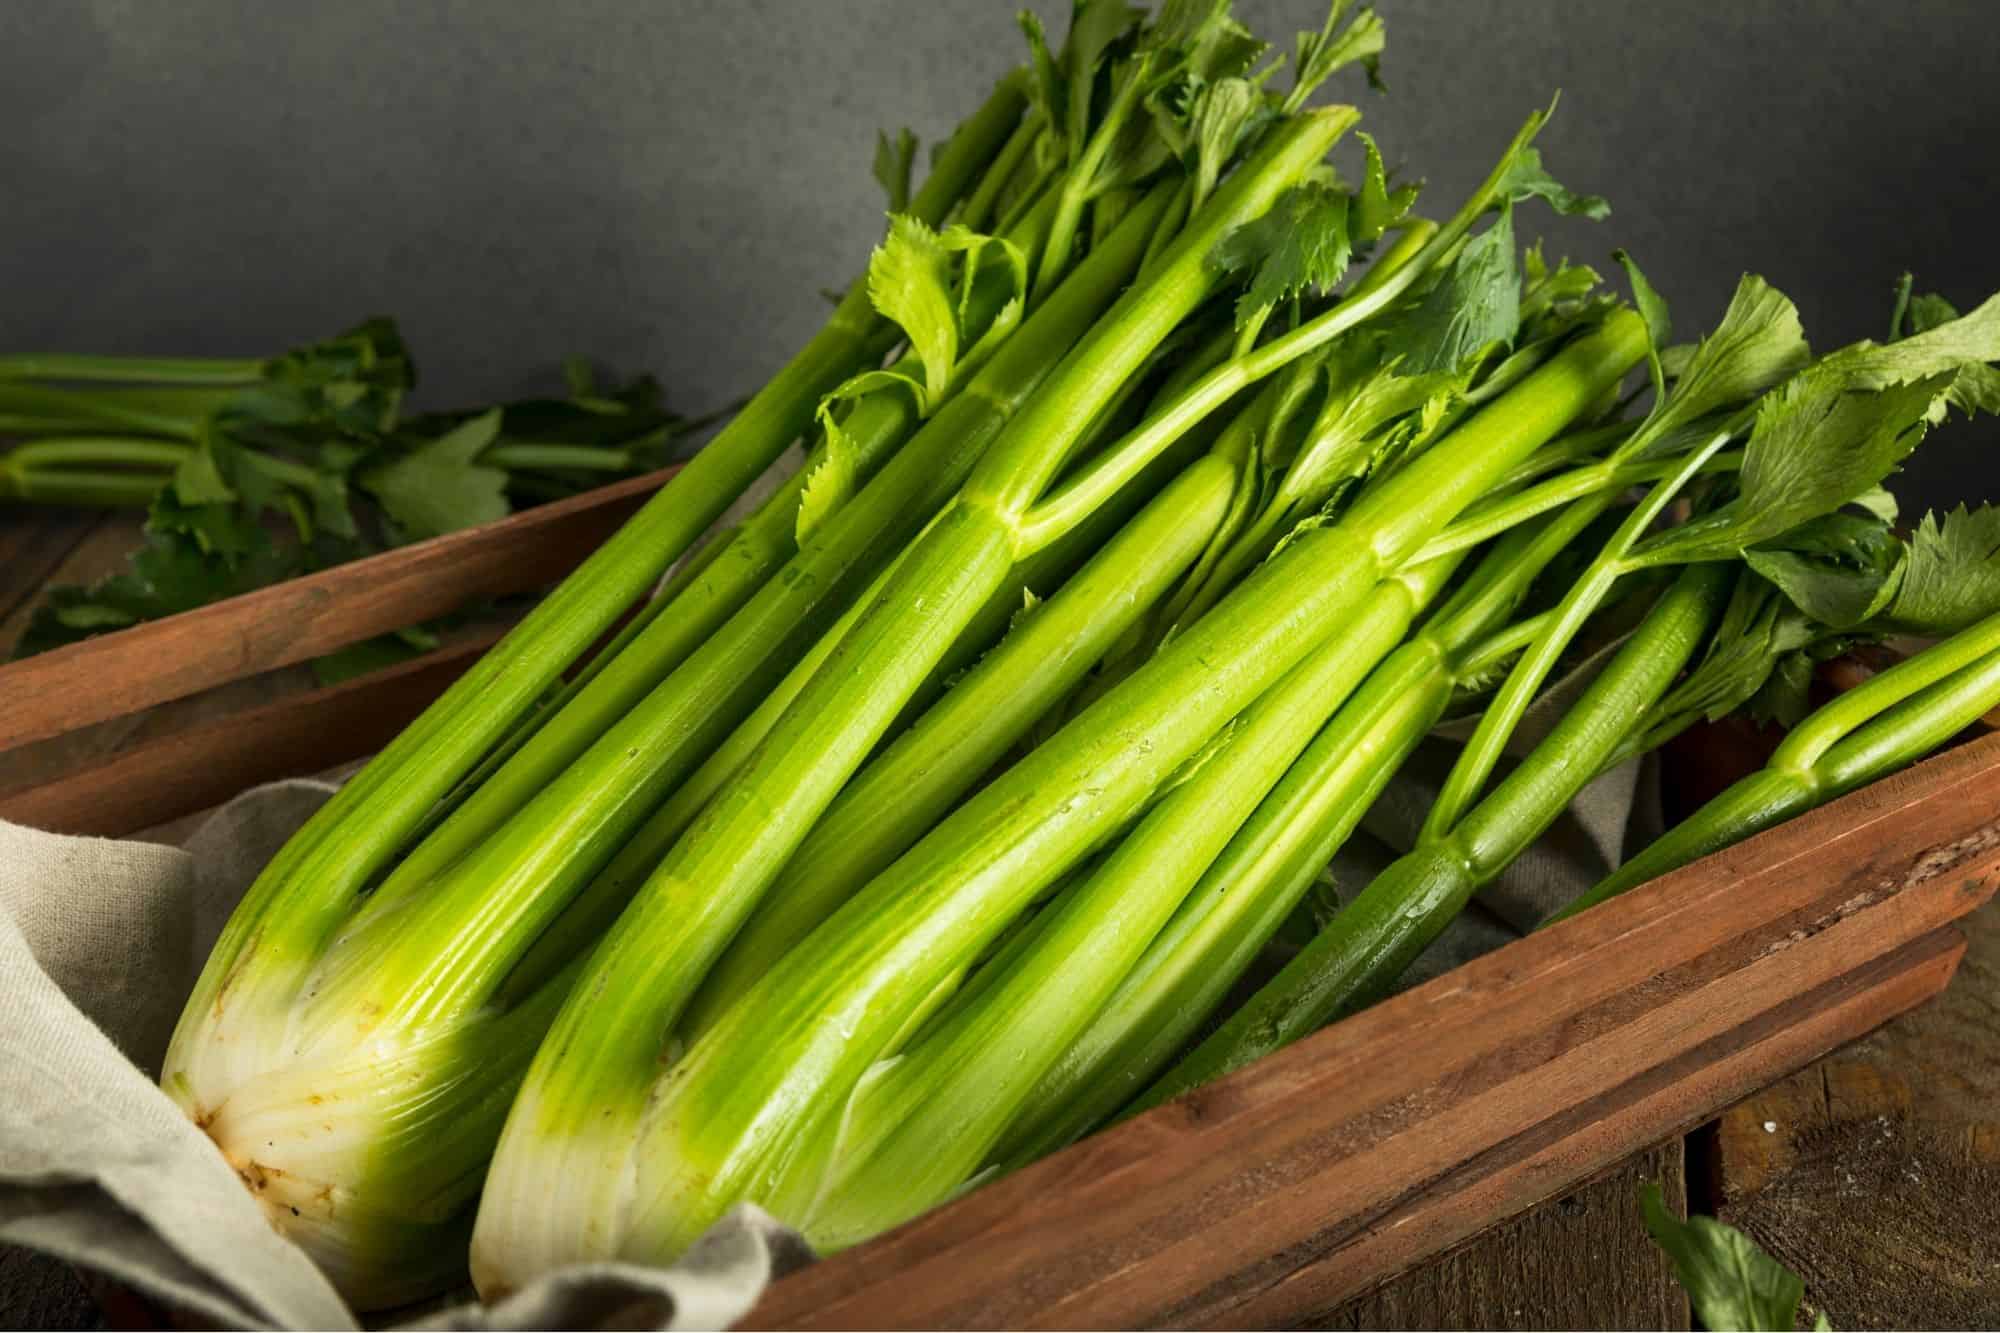 Celery stocks in a wooden box.